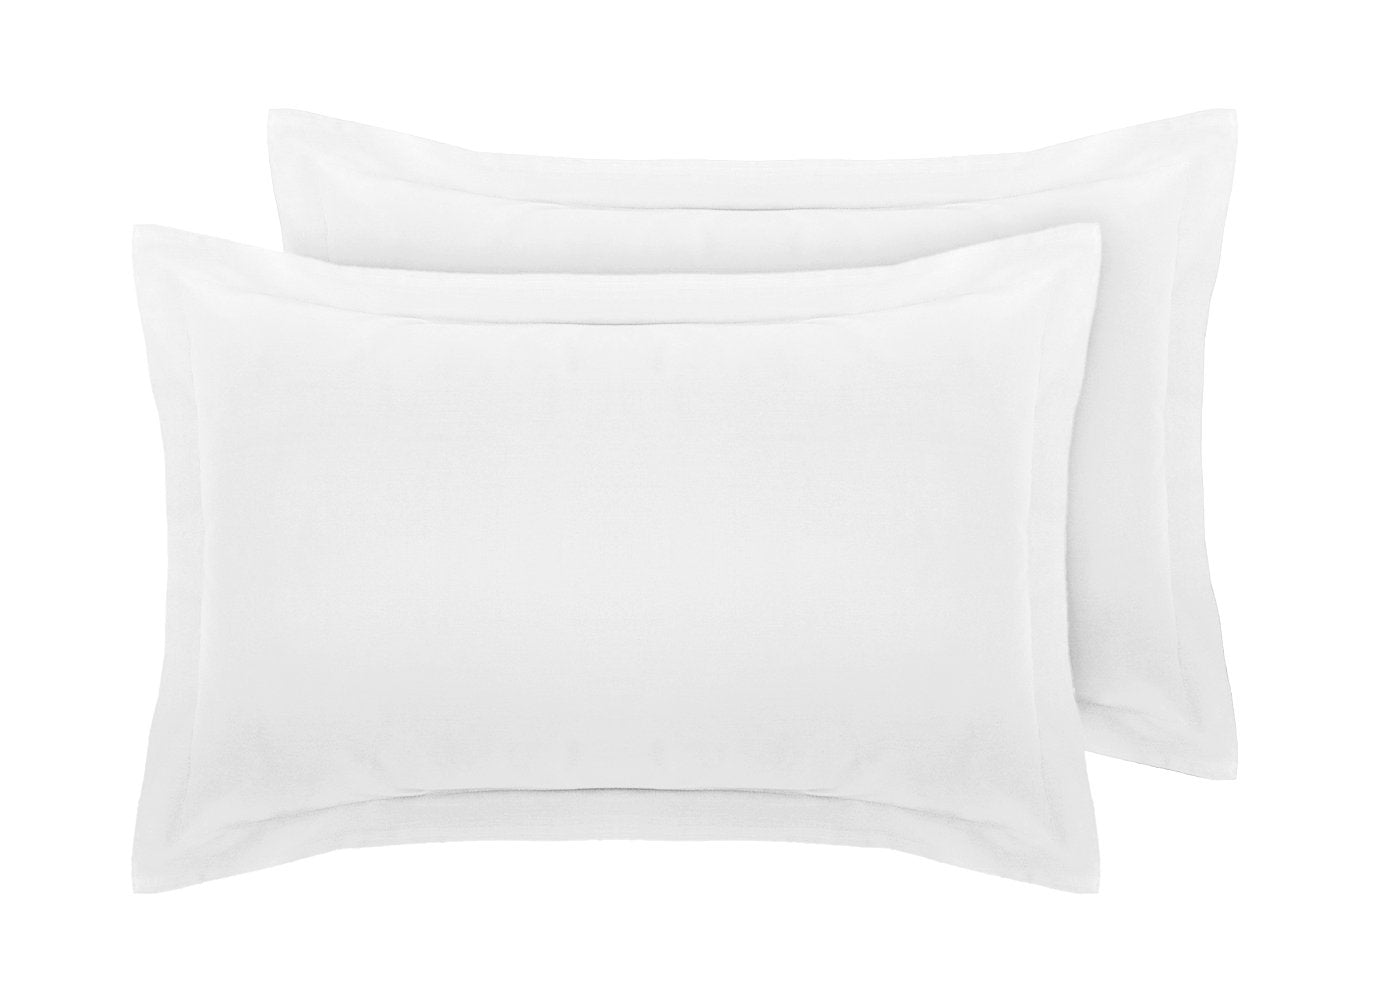 Pair Of Oxford Pillow Cases - White